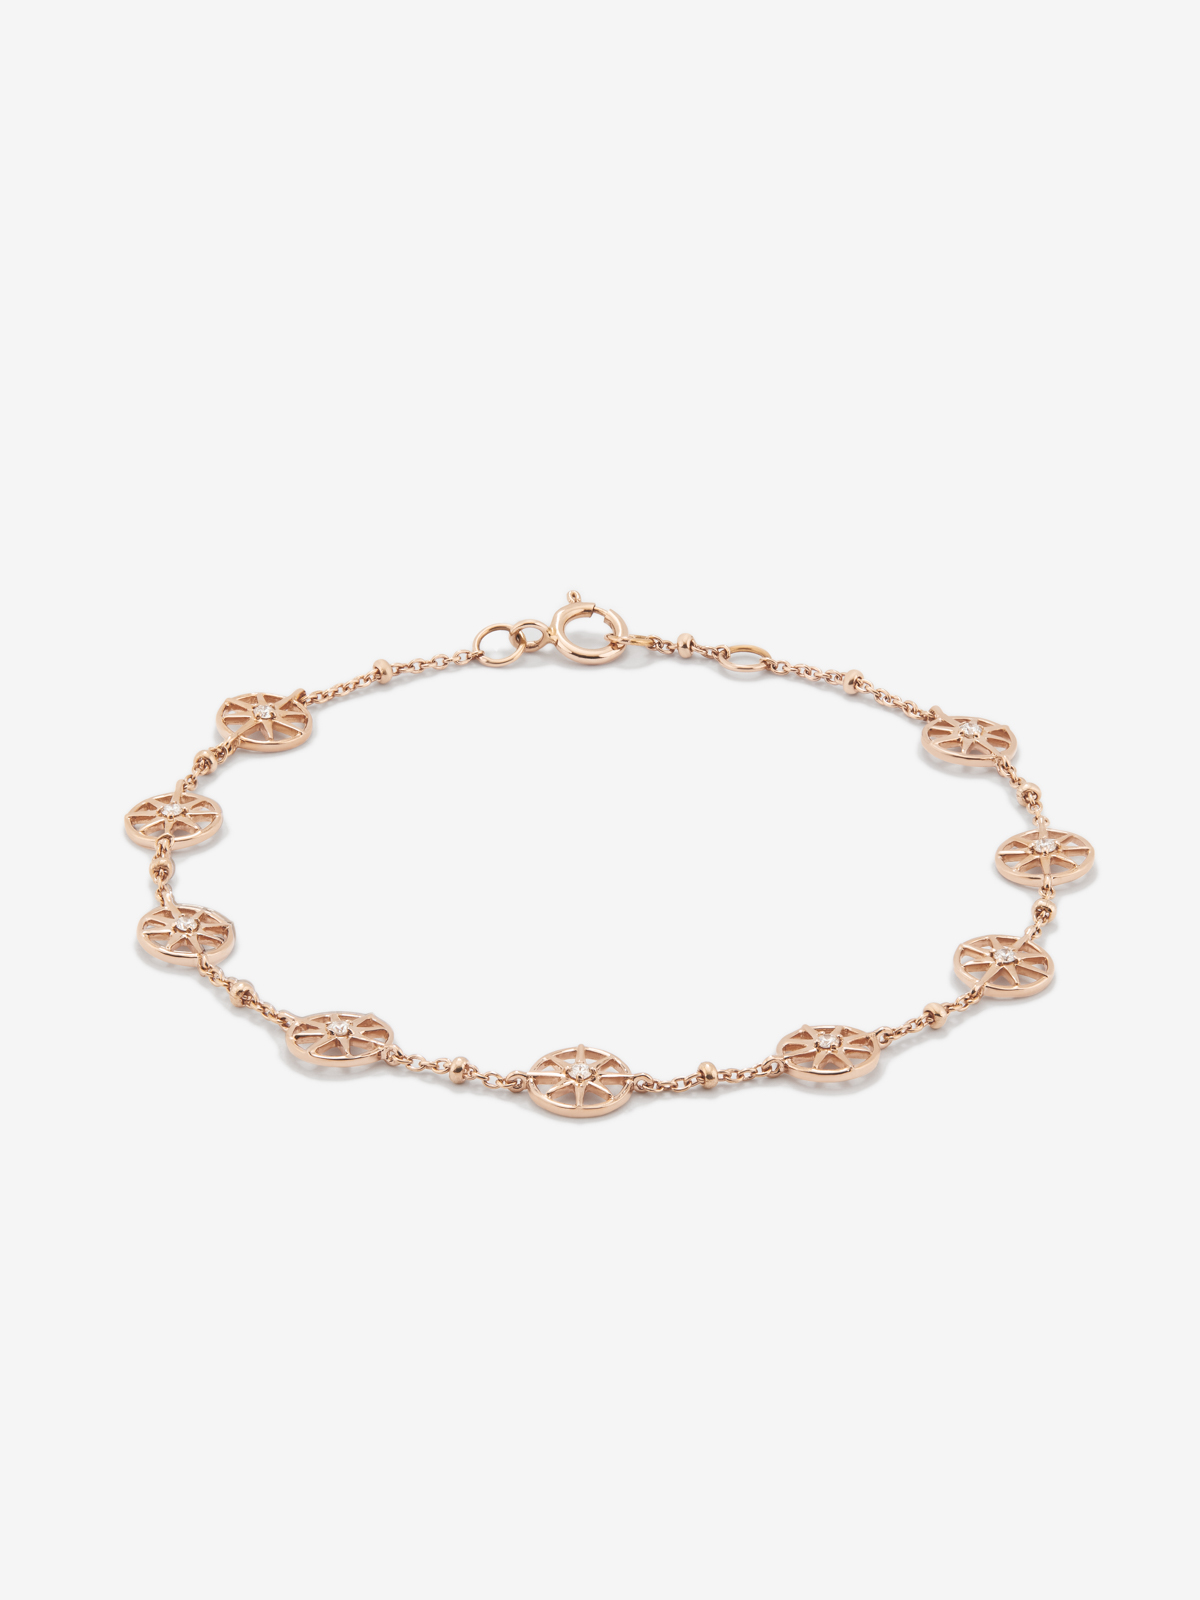 18K Rose Gold Chain Bracelet with Diamond Stars